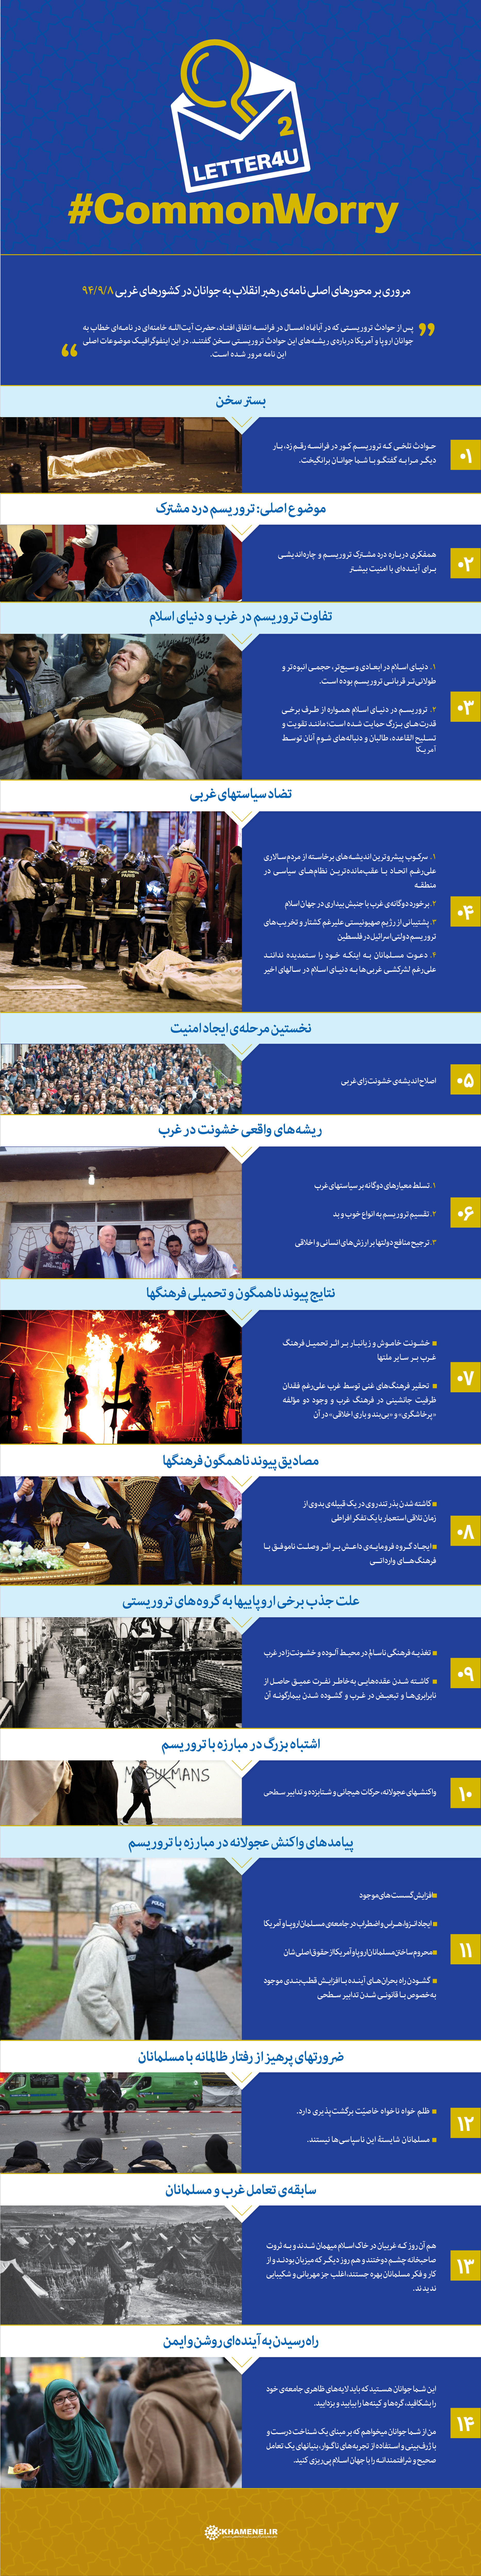 http://farsi.khamenei.ir/ndata/news/31558/B/13940908_0131558.jpg